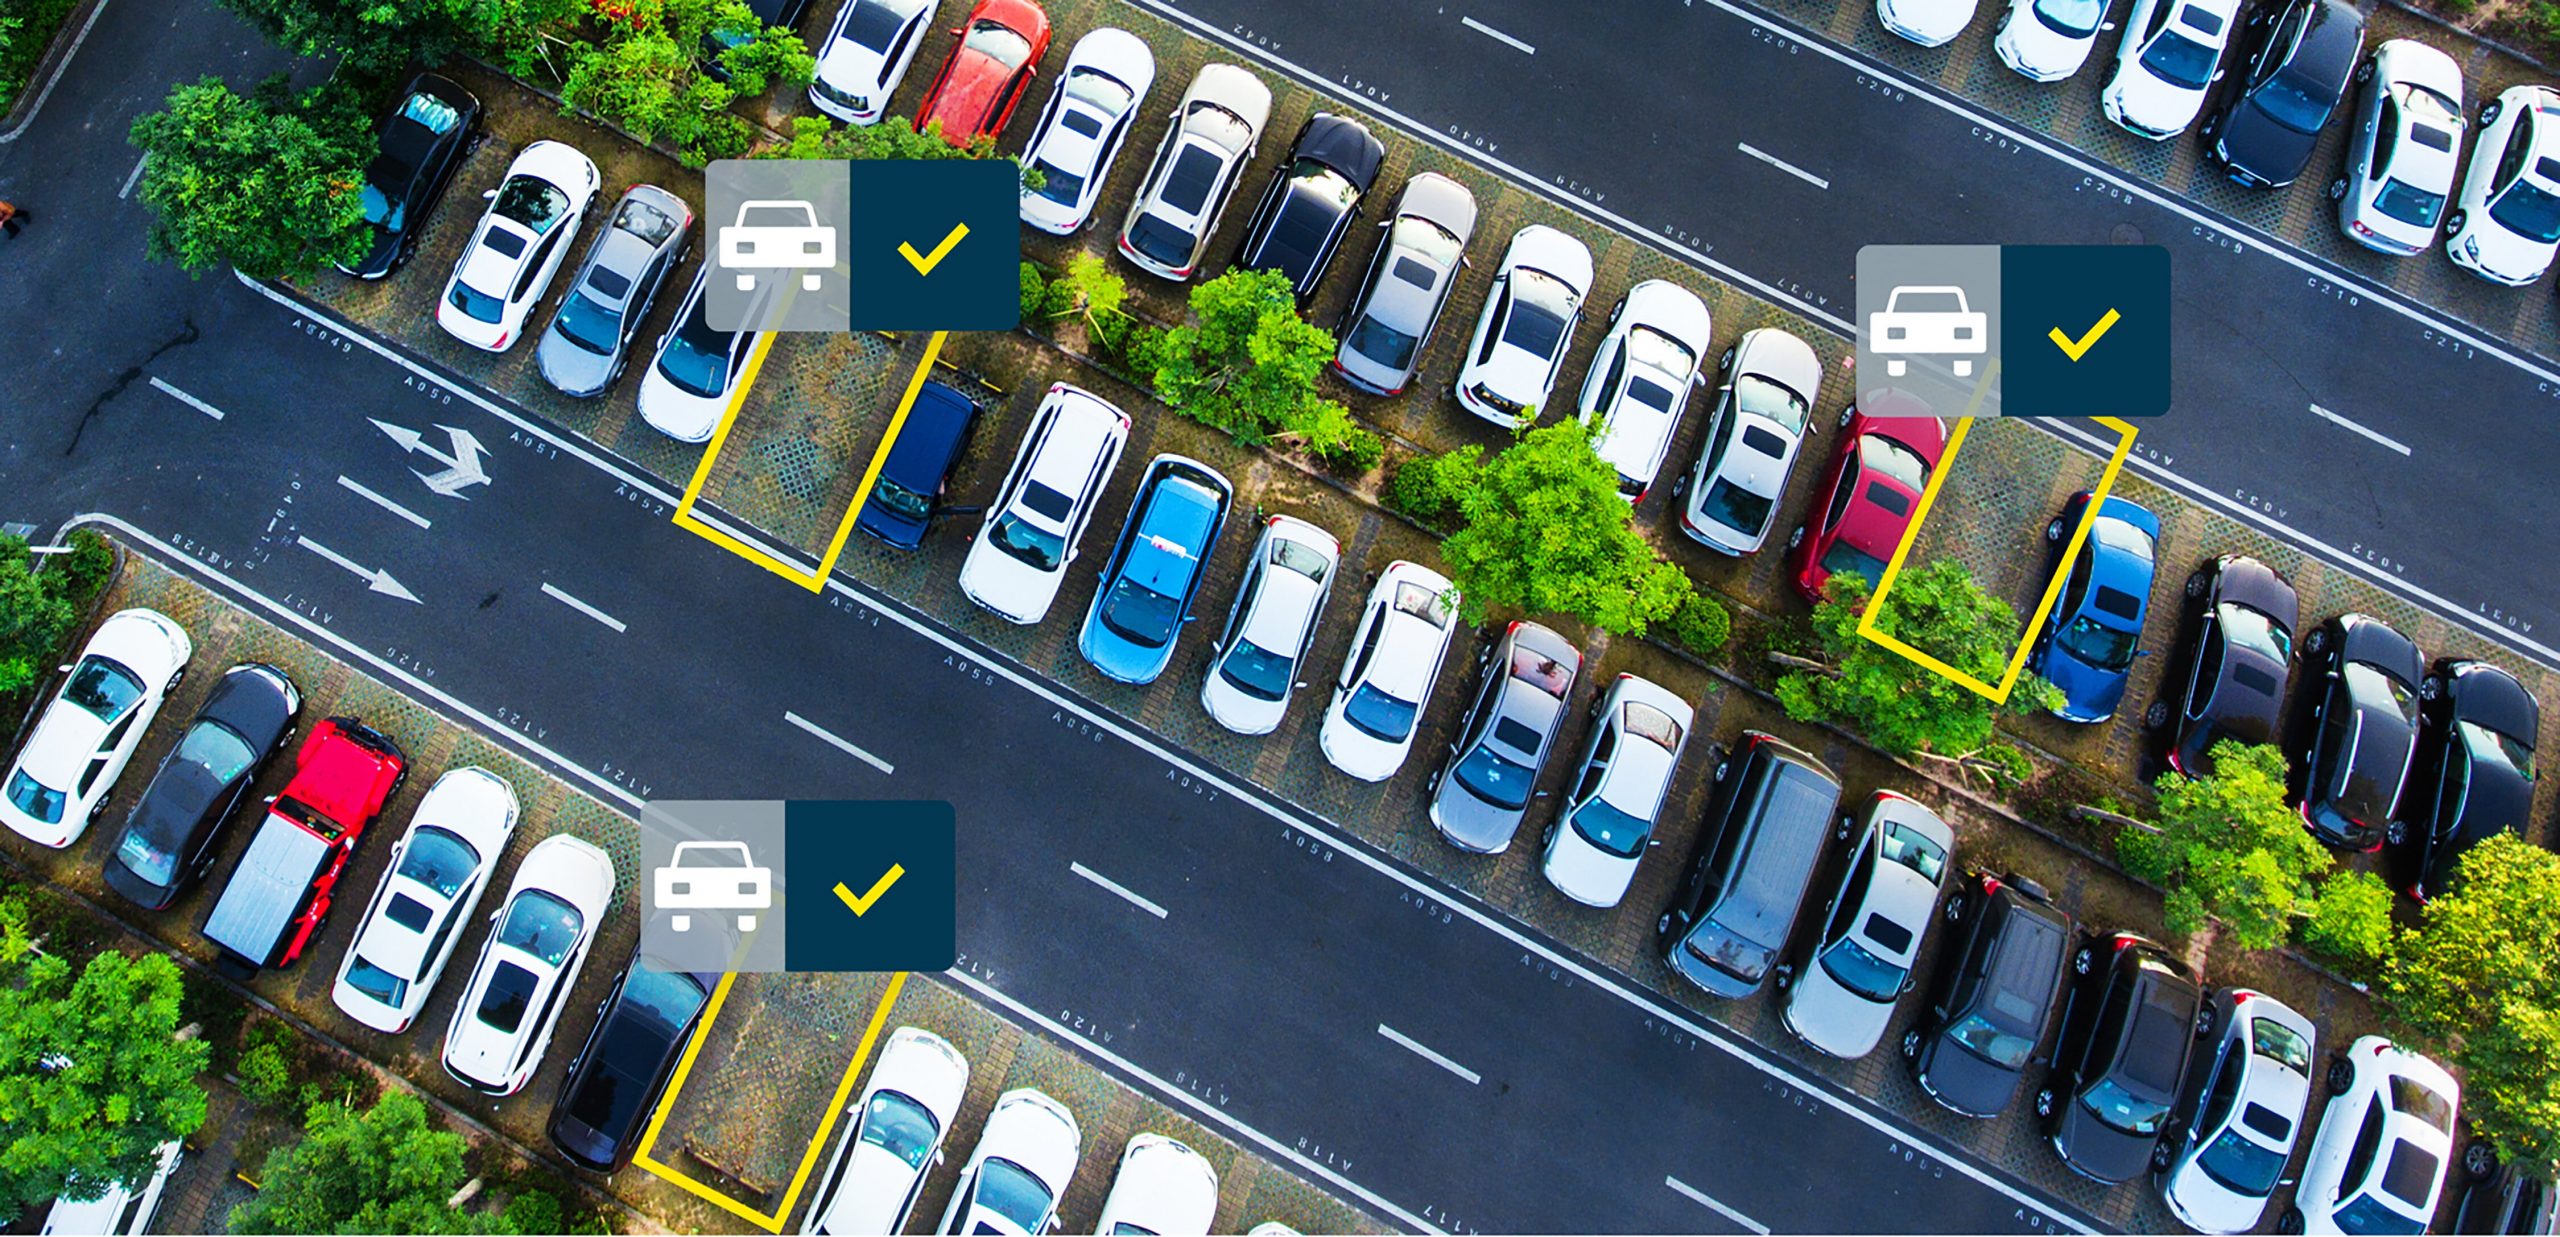 Milestone_City_Use_Case_Image_Smart_Parking_withgraphics